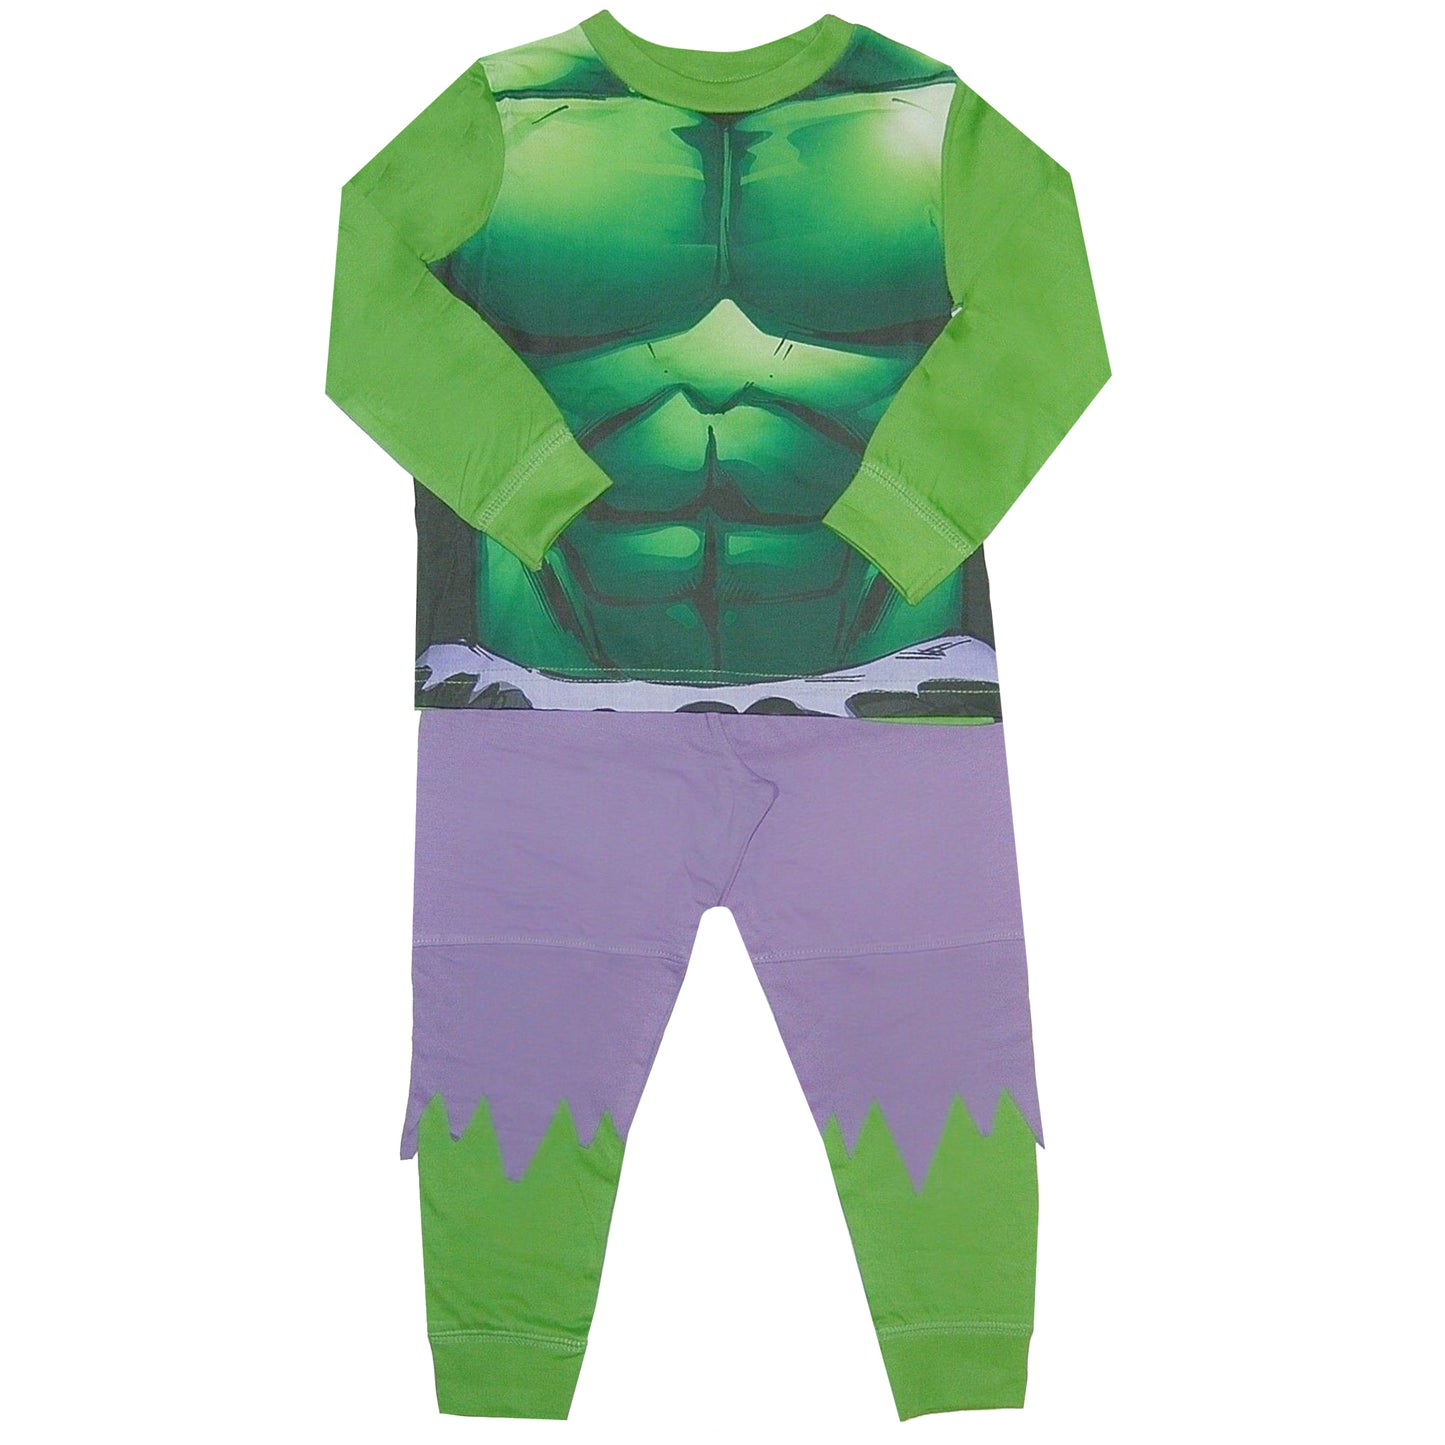 Boys Hulk Marvel Avengers Fancy Dress Pyjamas